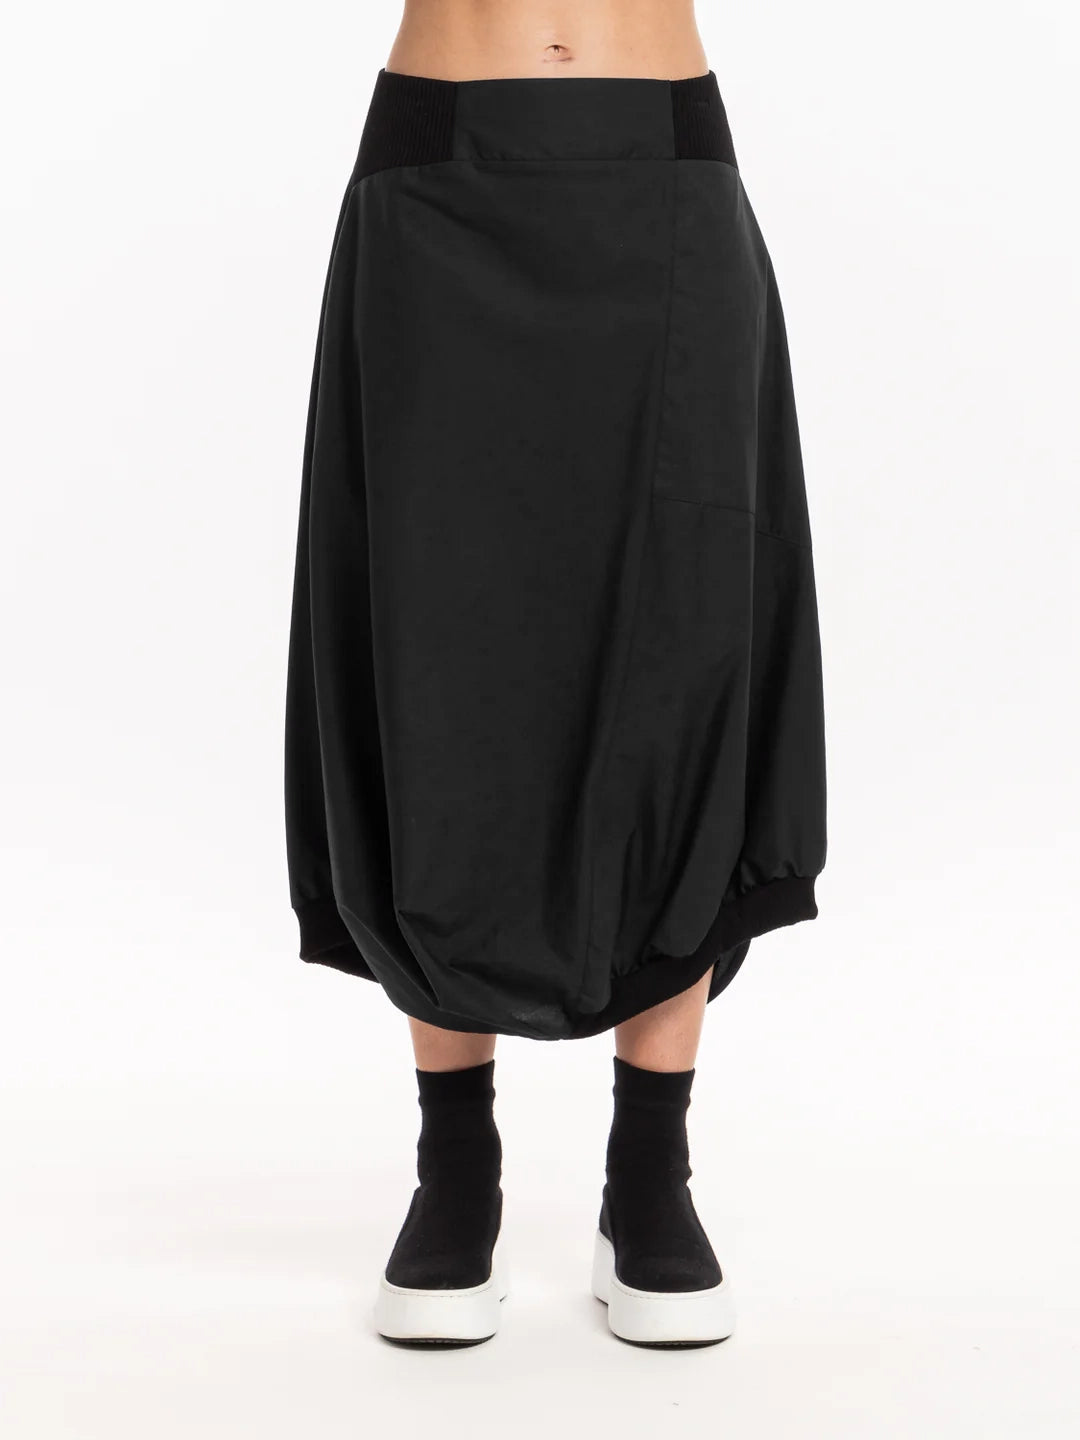 X.LAB Frost Noir Skirt Black